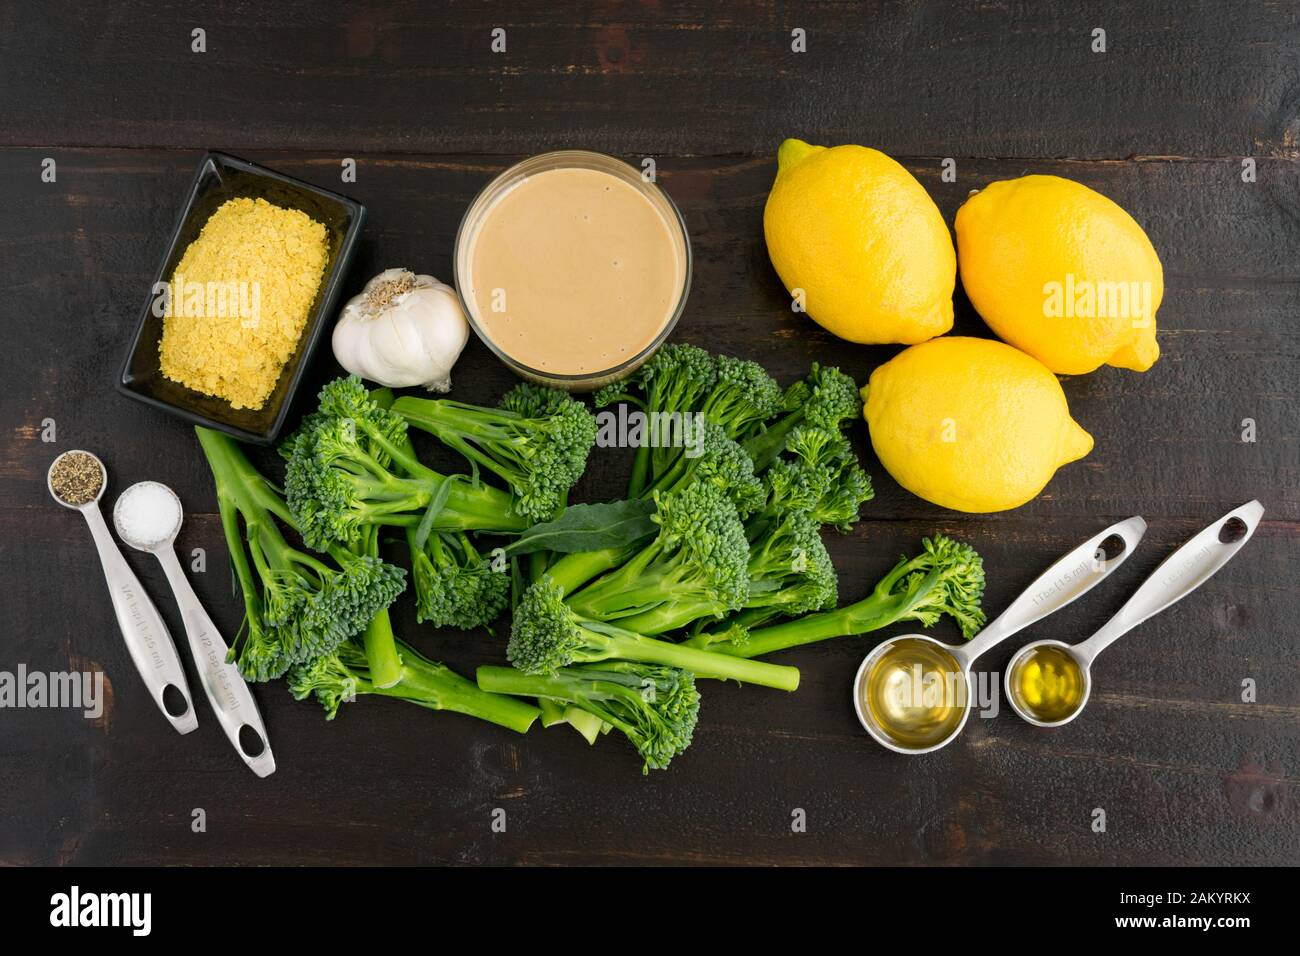 Broccolini with Lemon Tahini Dressing Ingredients: Raw broccolini, lemons, tahini, and other ingredients Stock Photo